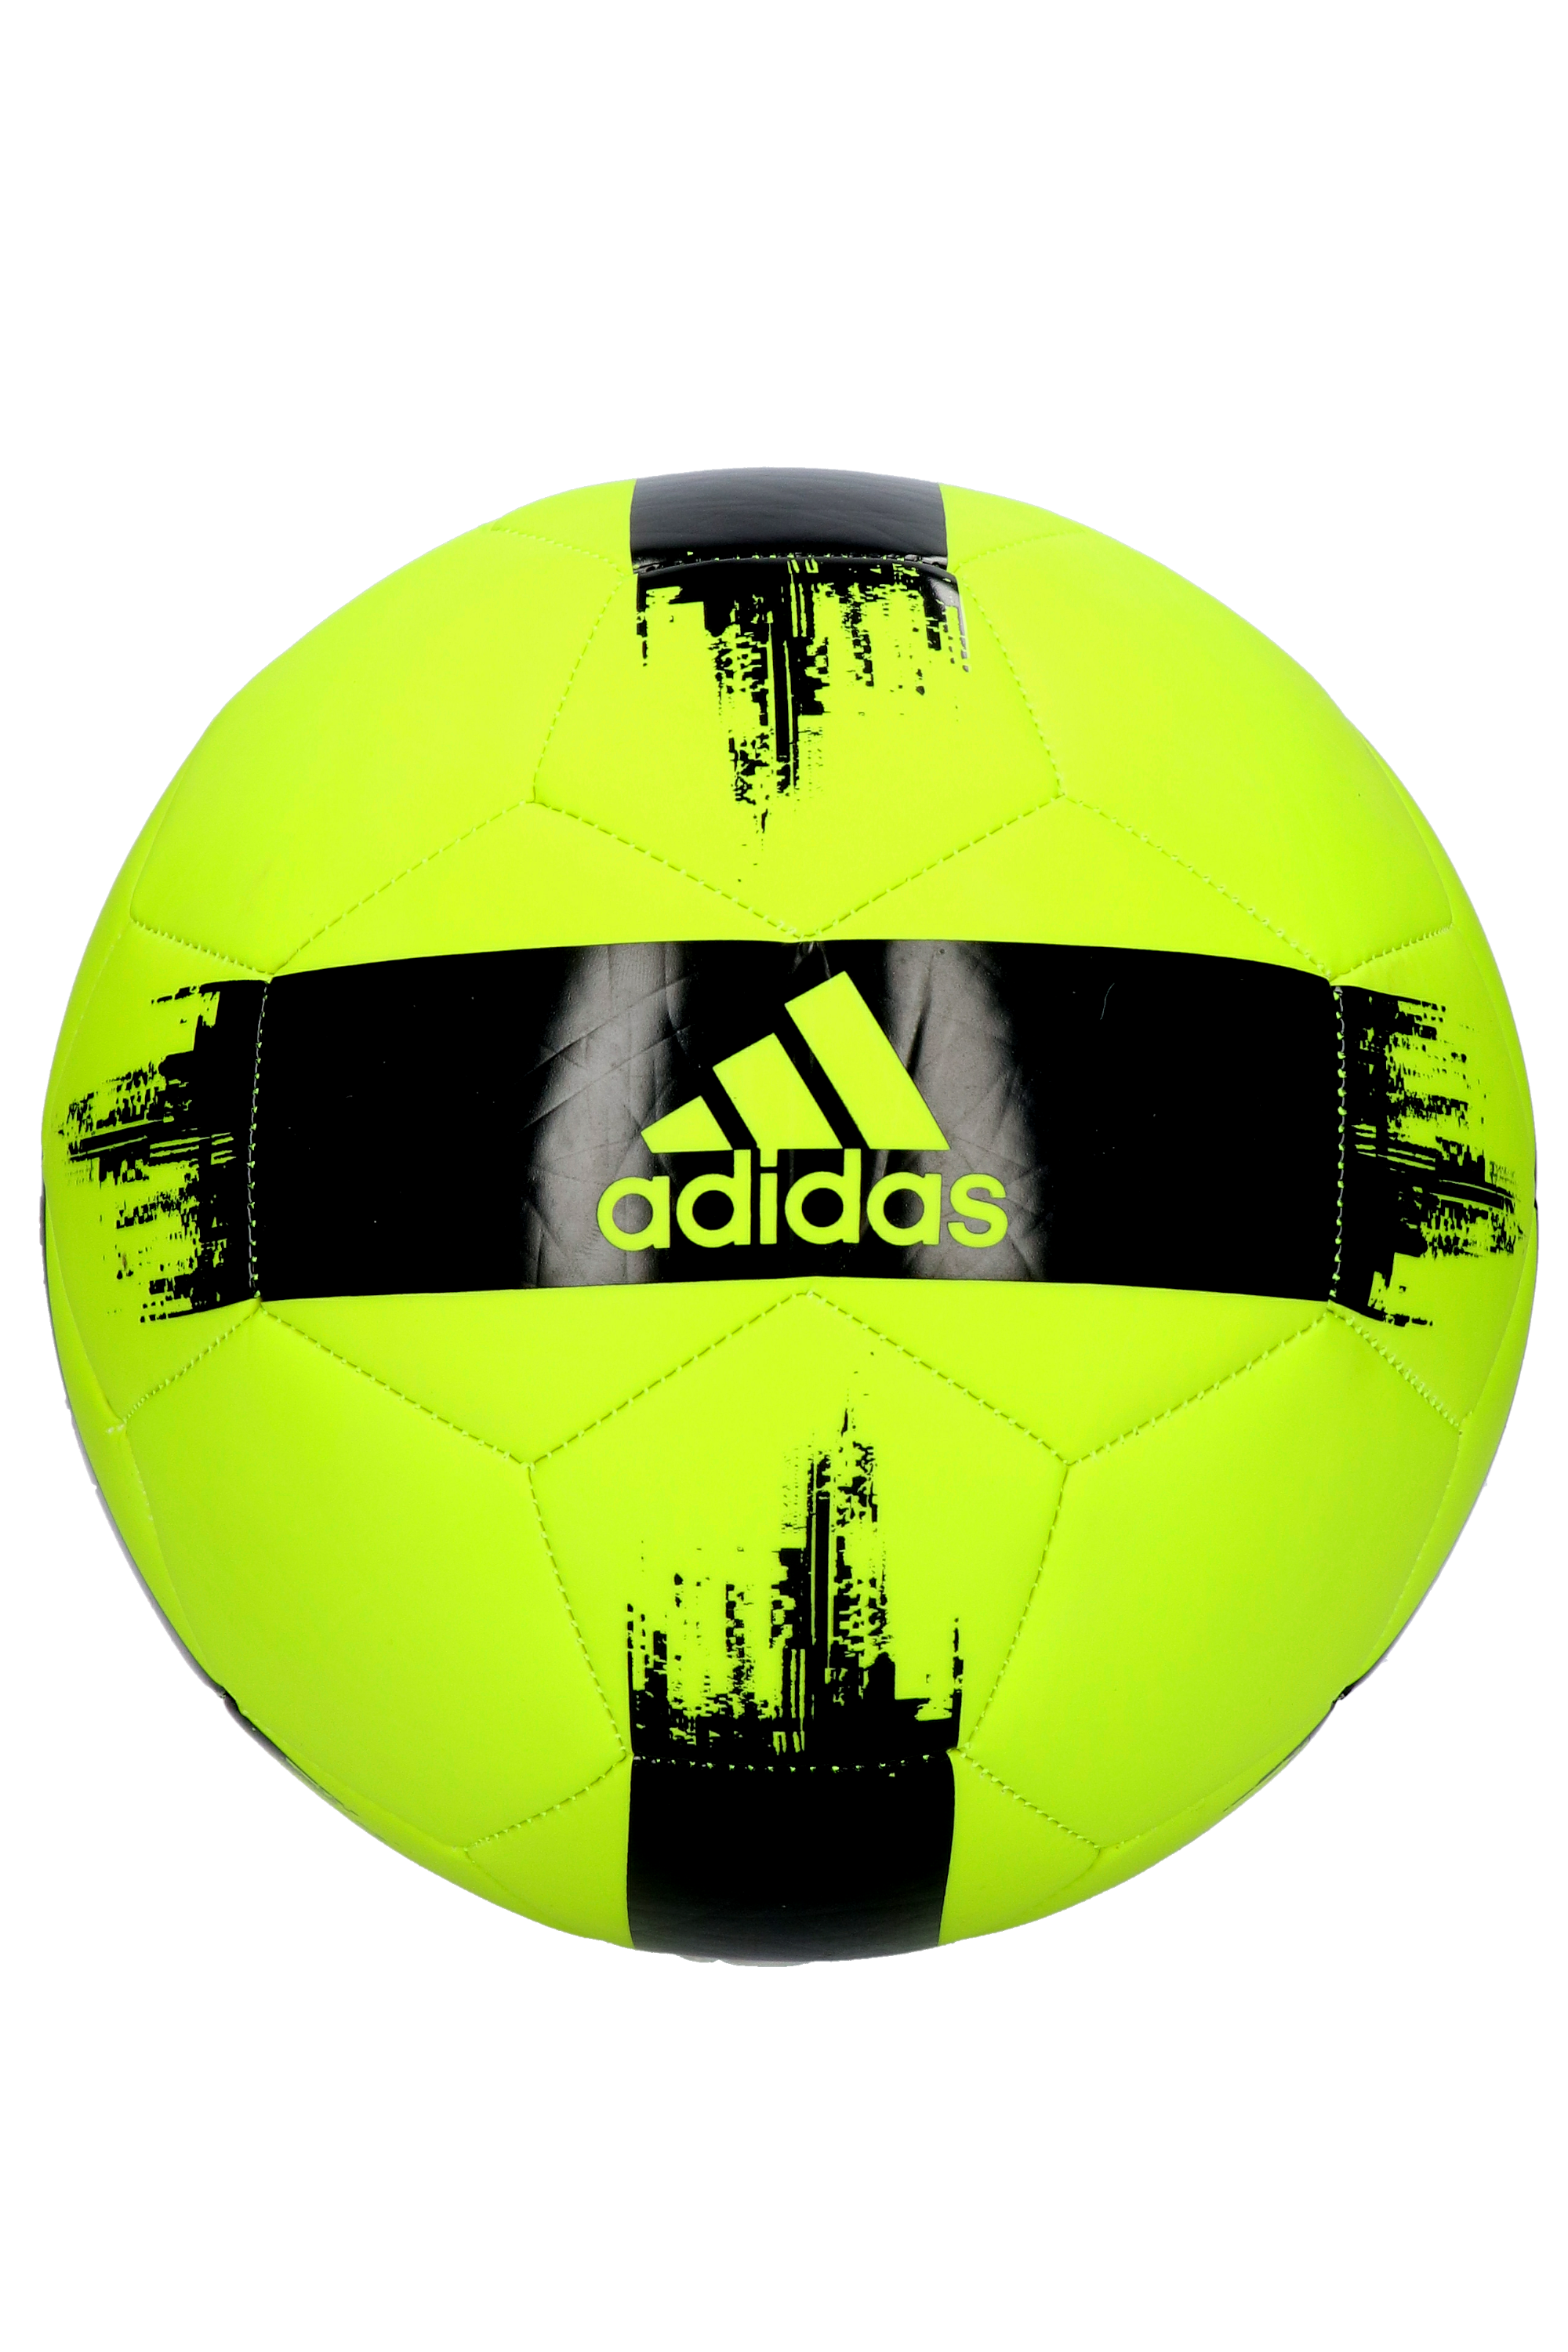 Ball adidas EPP II Syello size 5 | R-GOL.com - Football boots \u0026 equipment